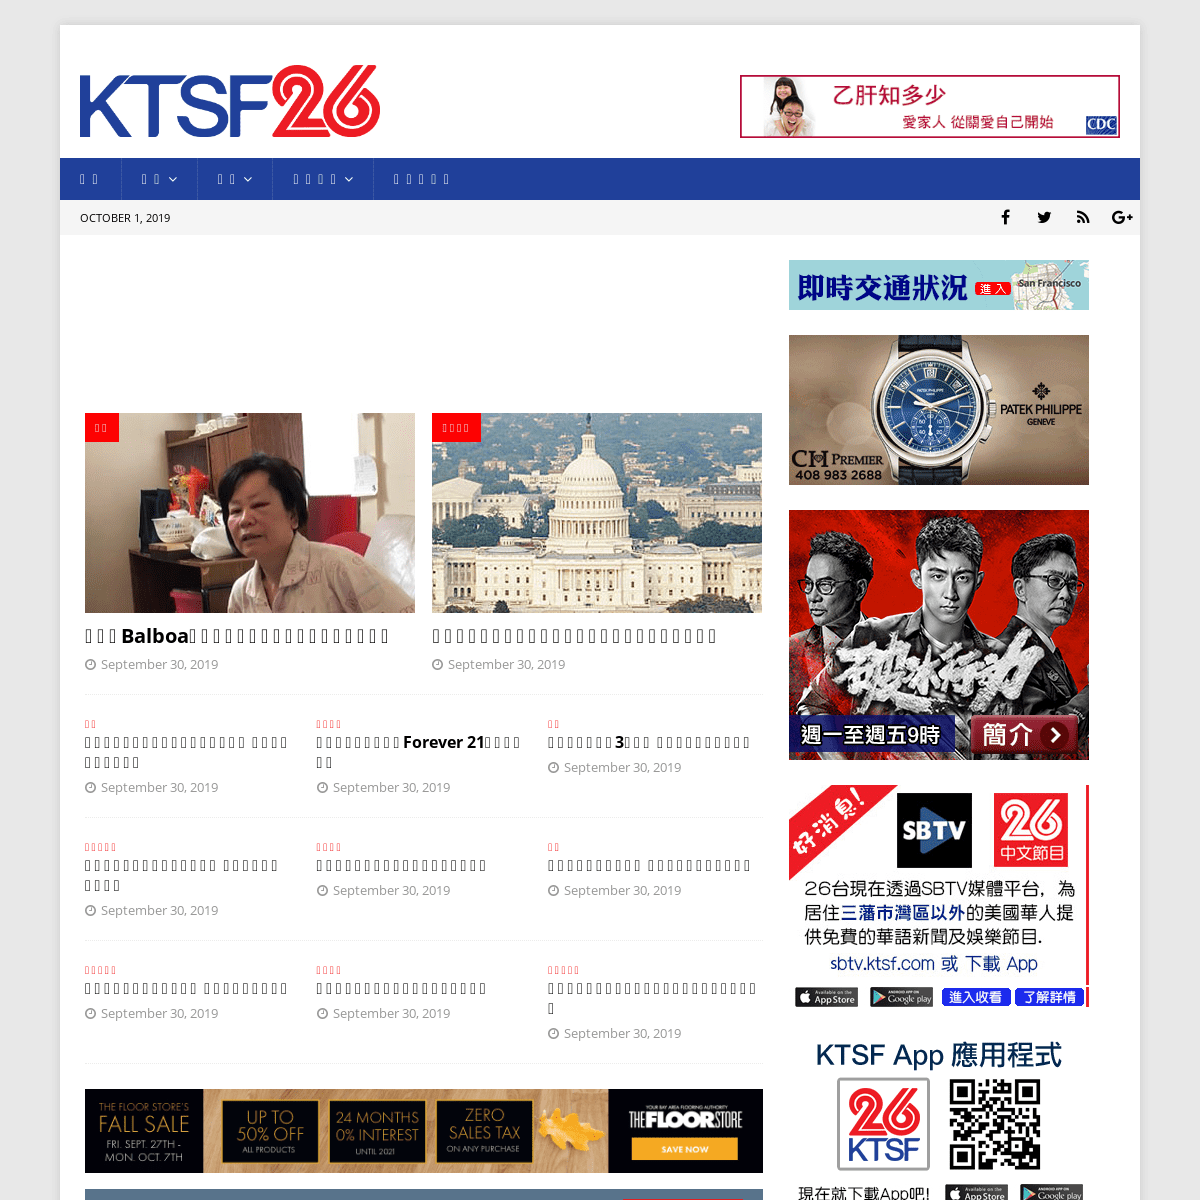 KTSF Channel 26 – San Francisco Bay Area